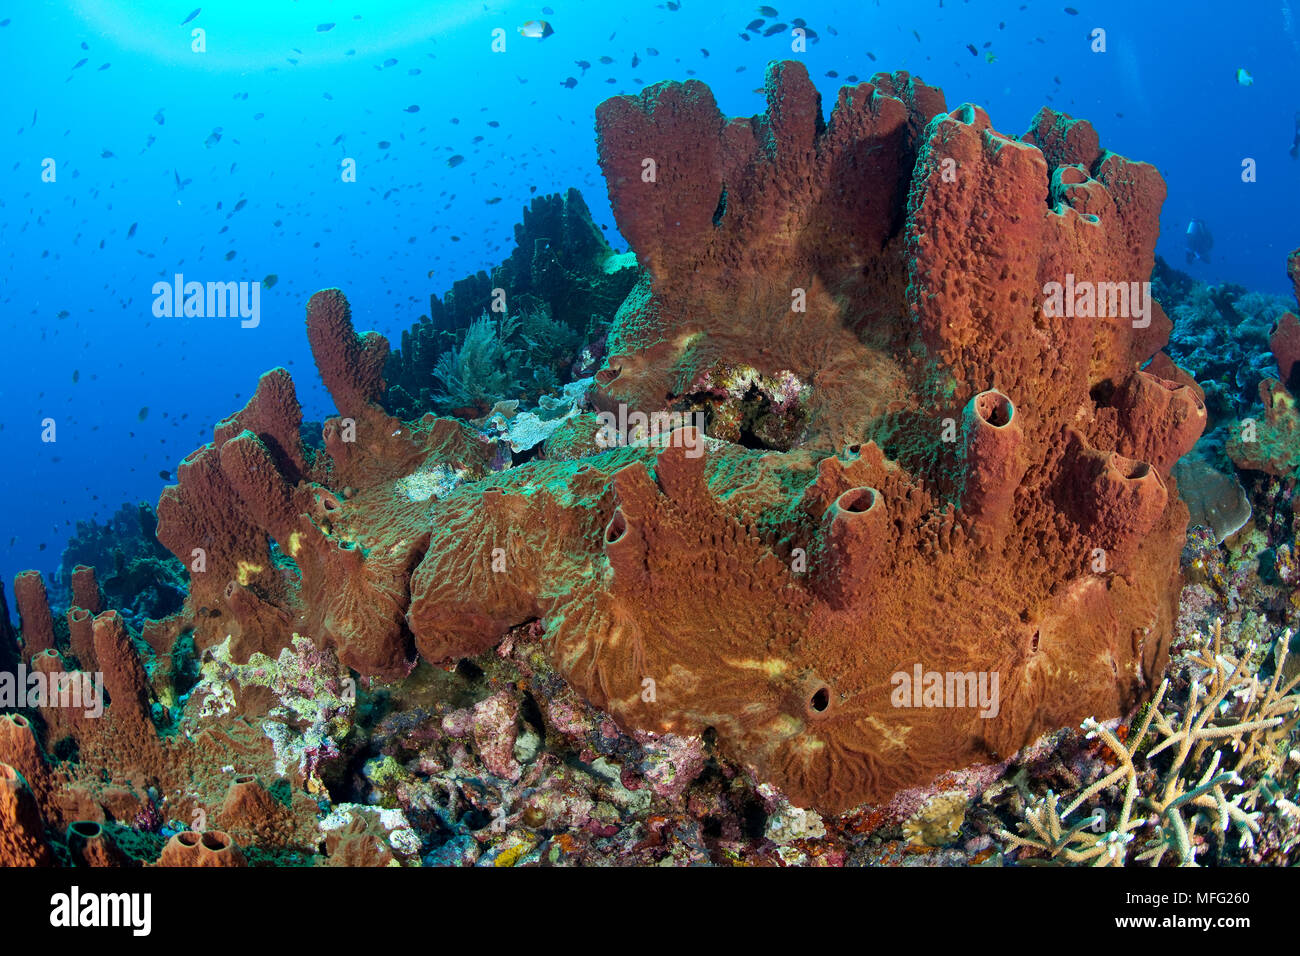 Ligament sponge, Diacarnus spinipoculum, Halmahera, Moluccas Sea, Indonesia, Pacific Ocean Stock Photo